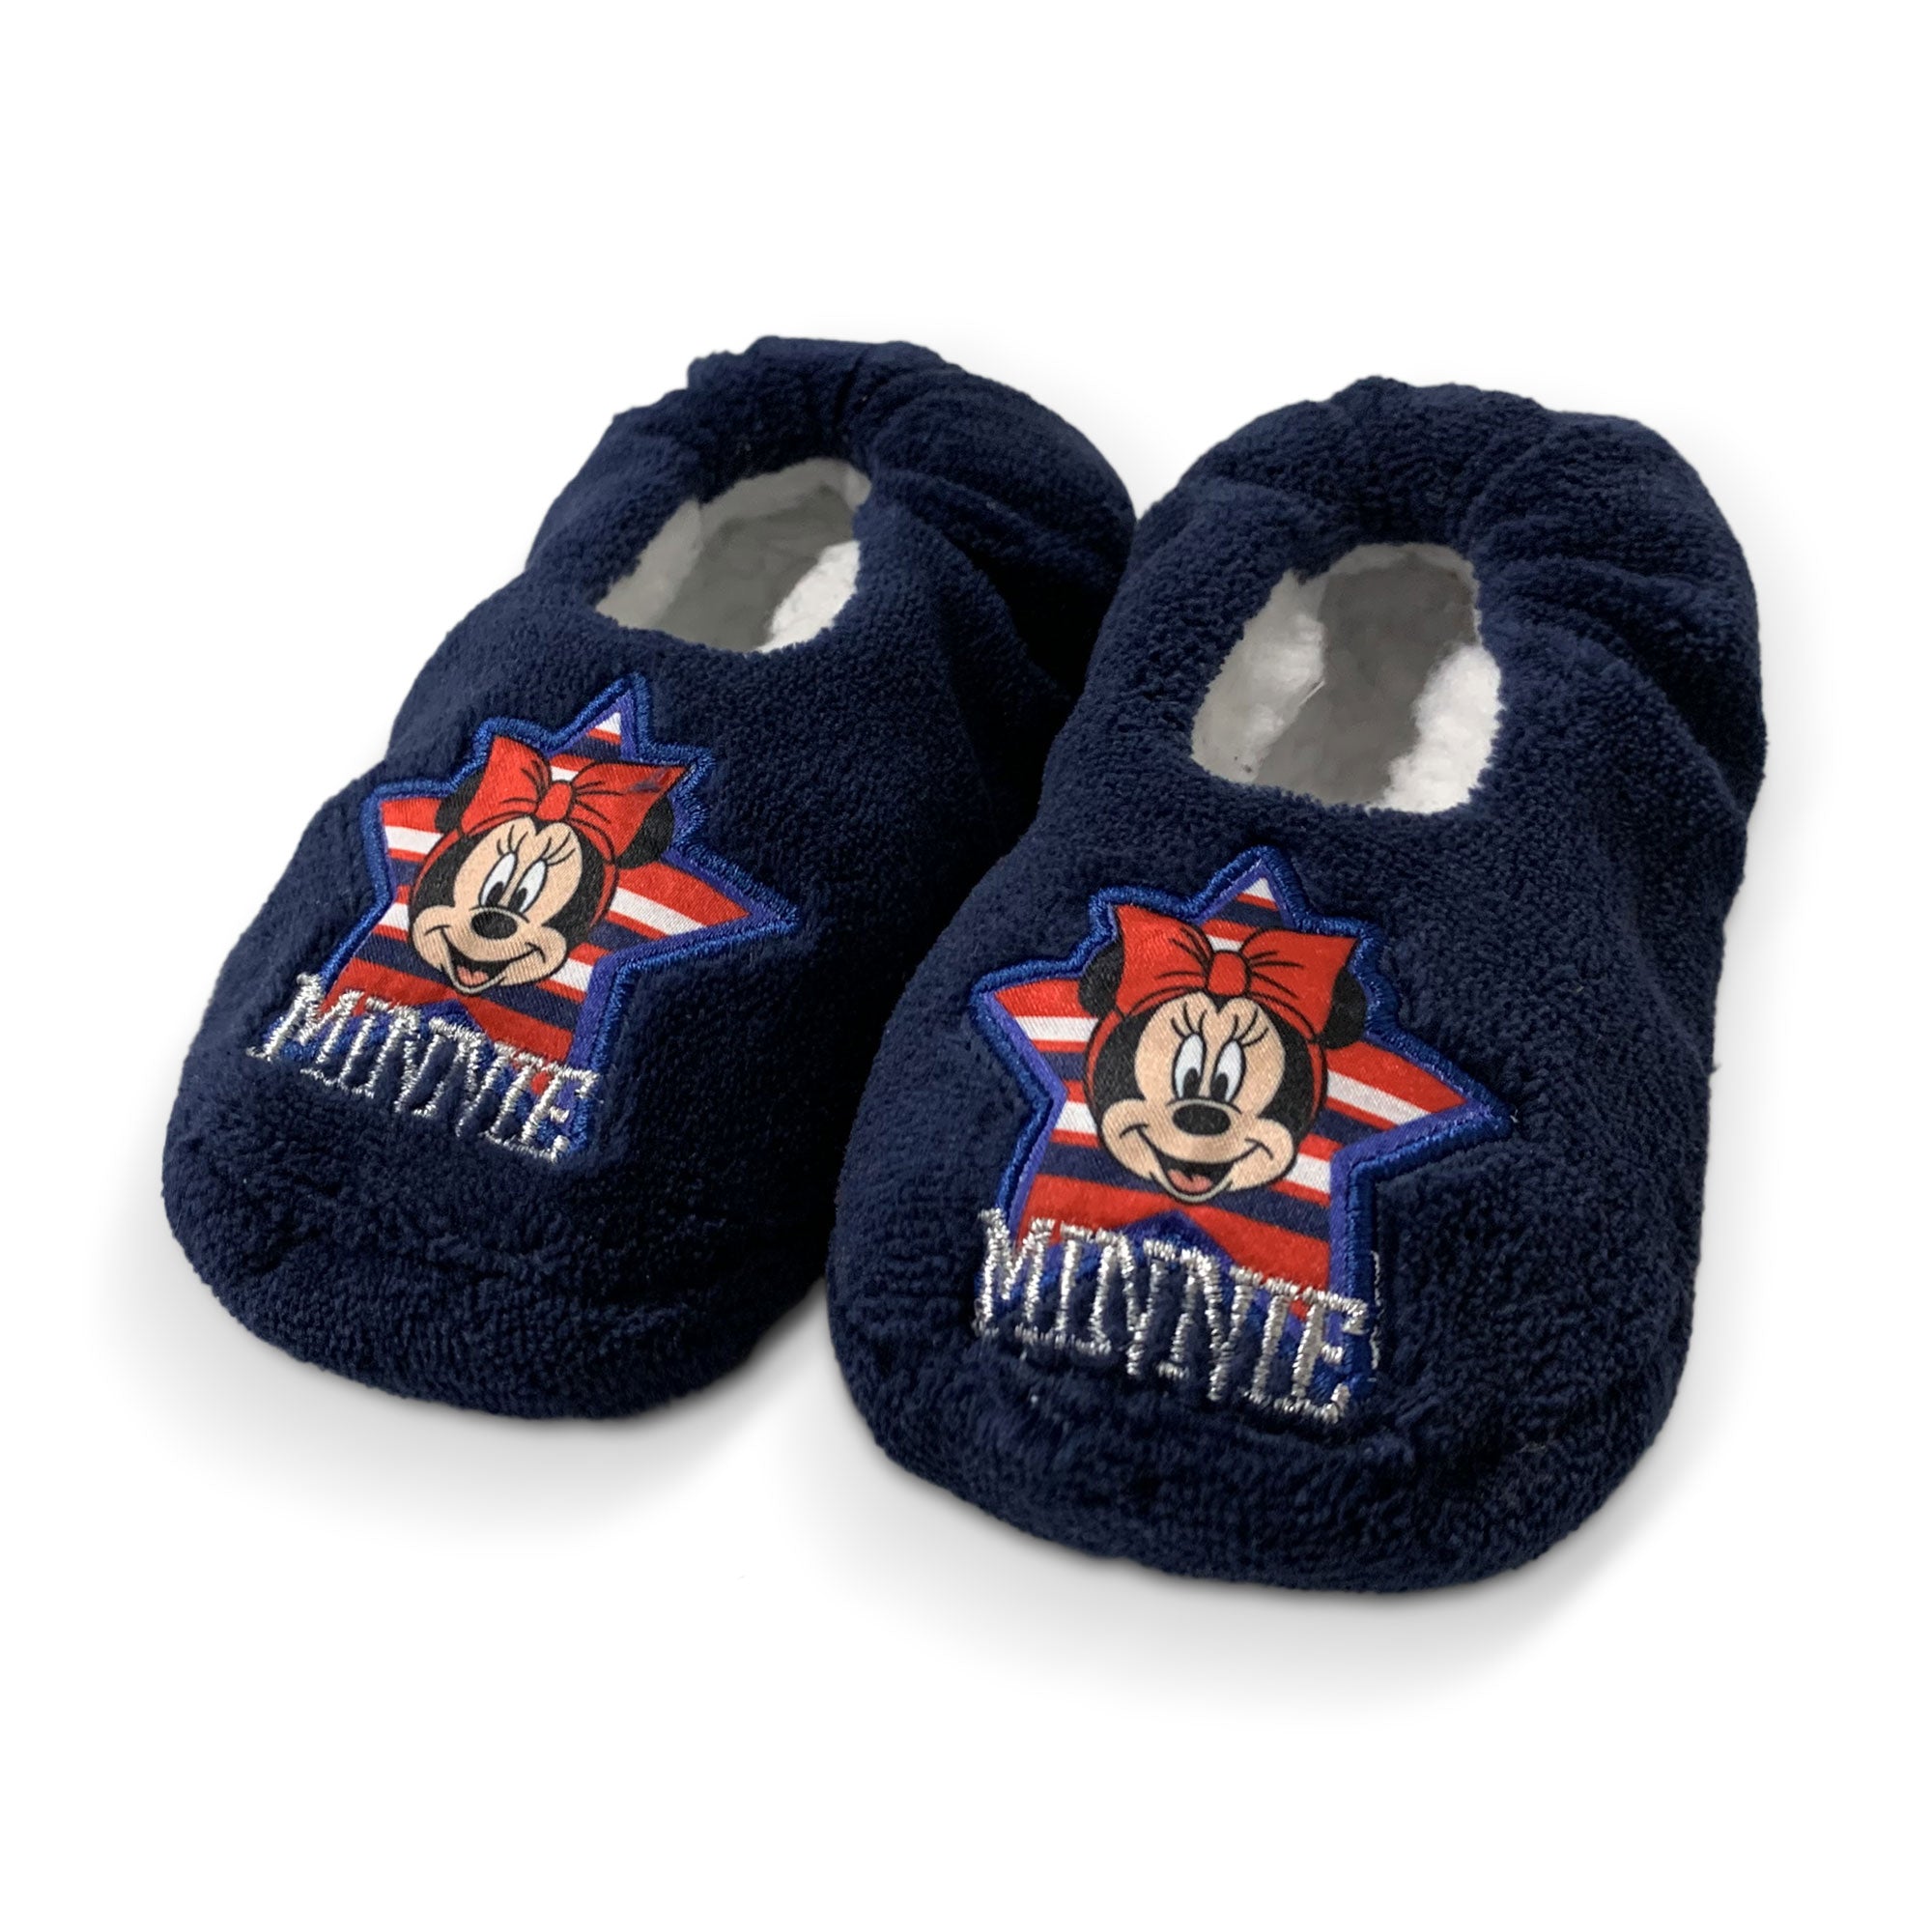 Pantofole invernali chiuse Disney Minnie Mouse antiscivolo peluche bambina 5900